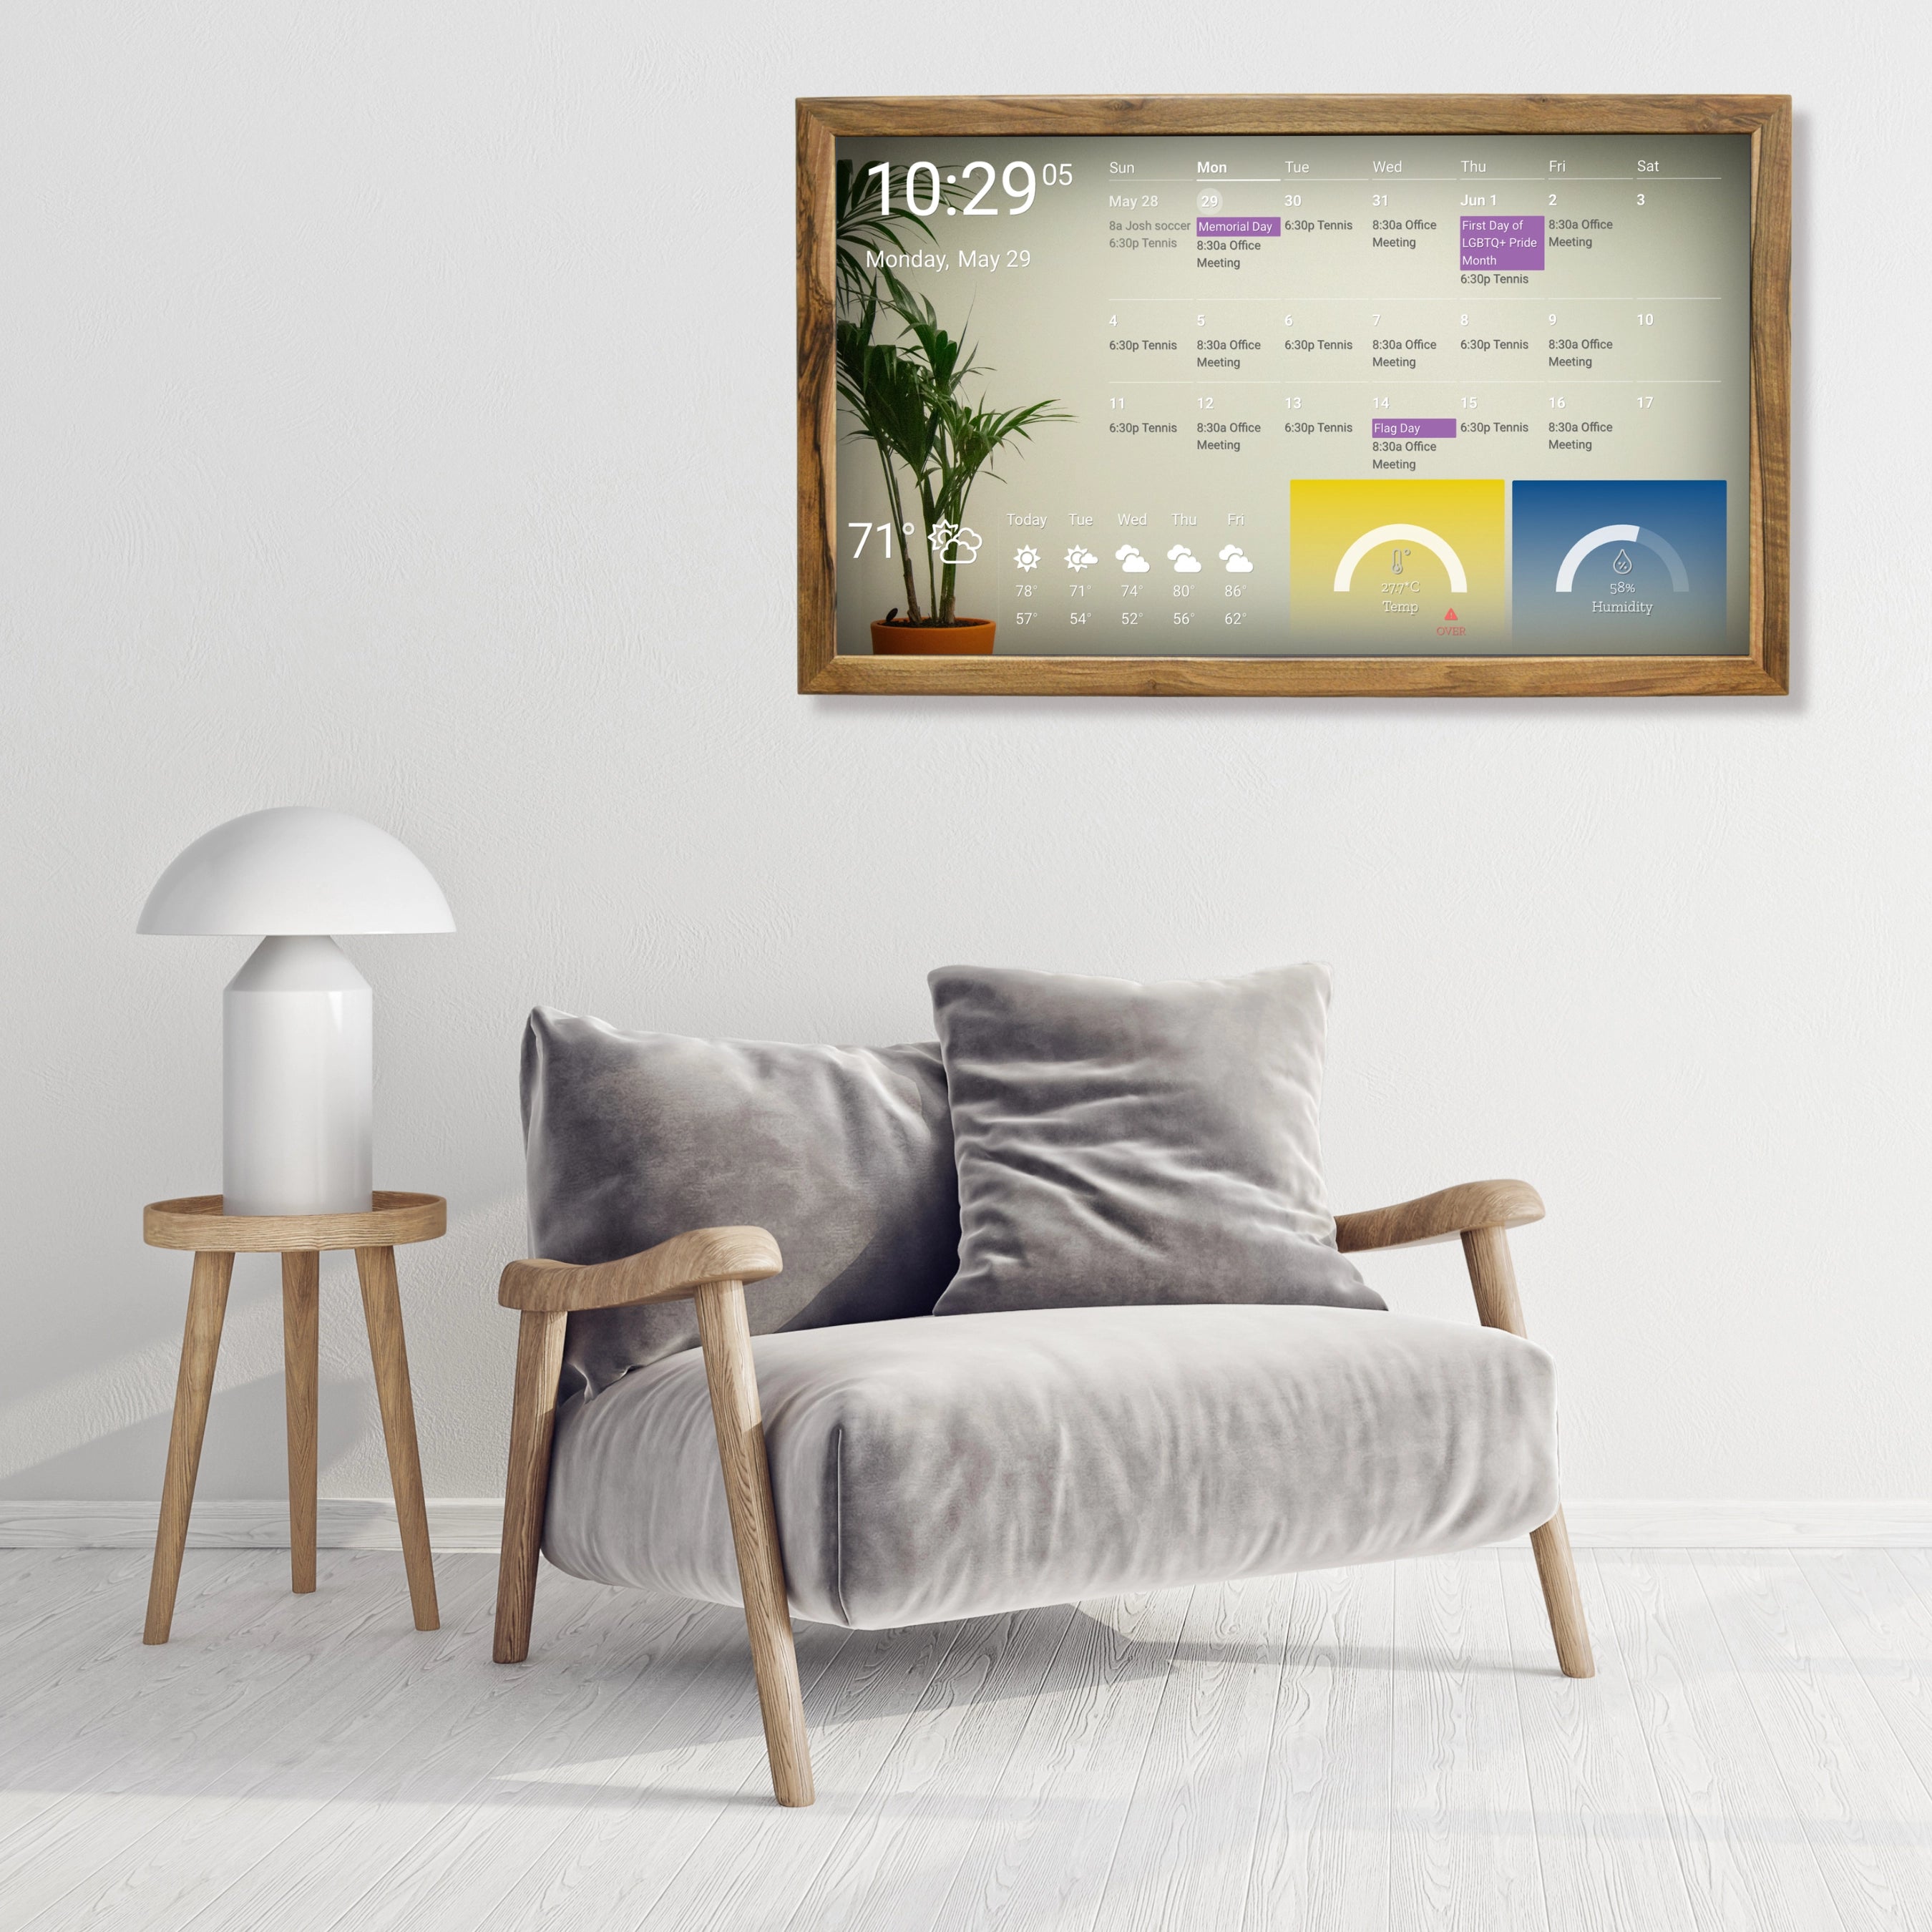 Smart Wall Calendar 32 Inch in Wooden Frame